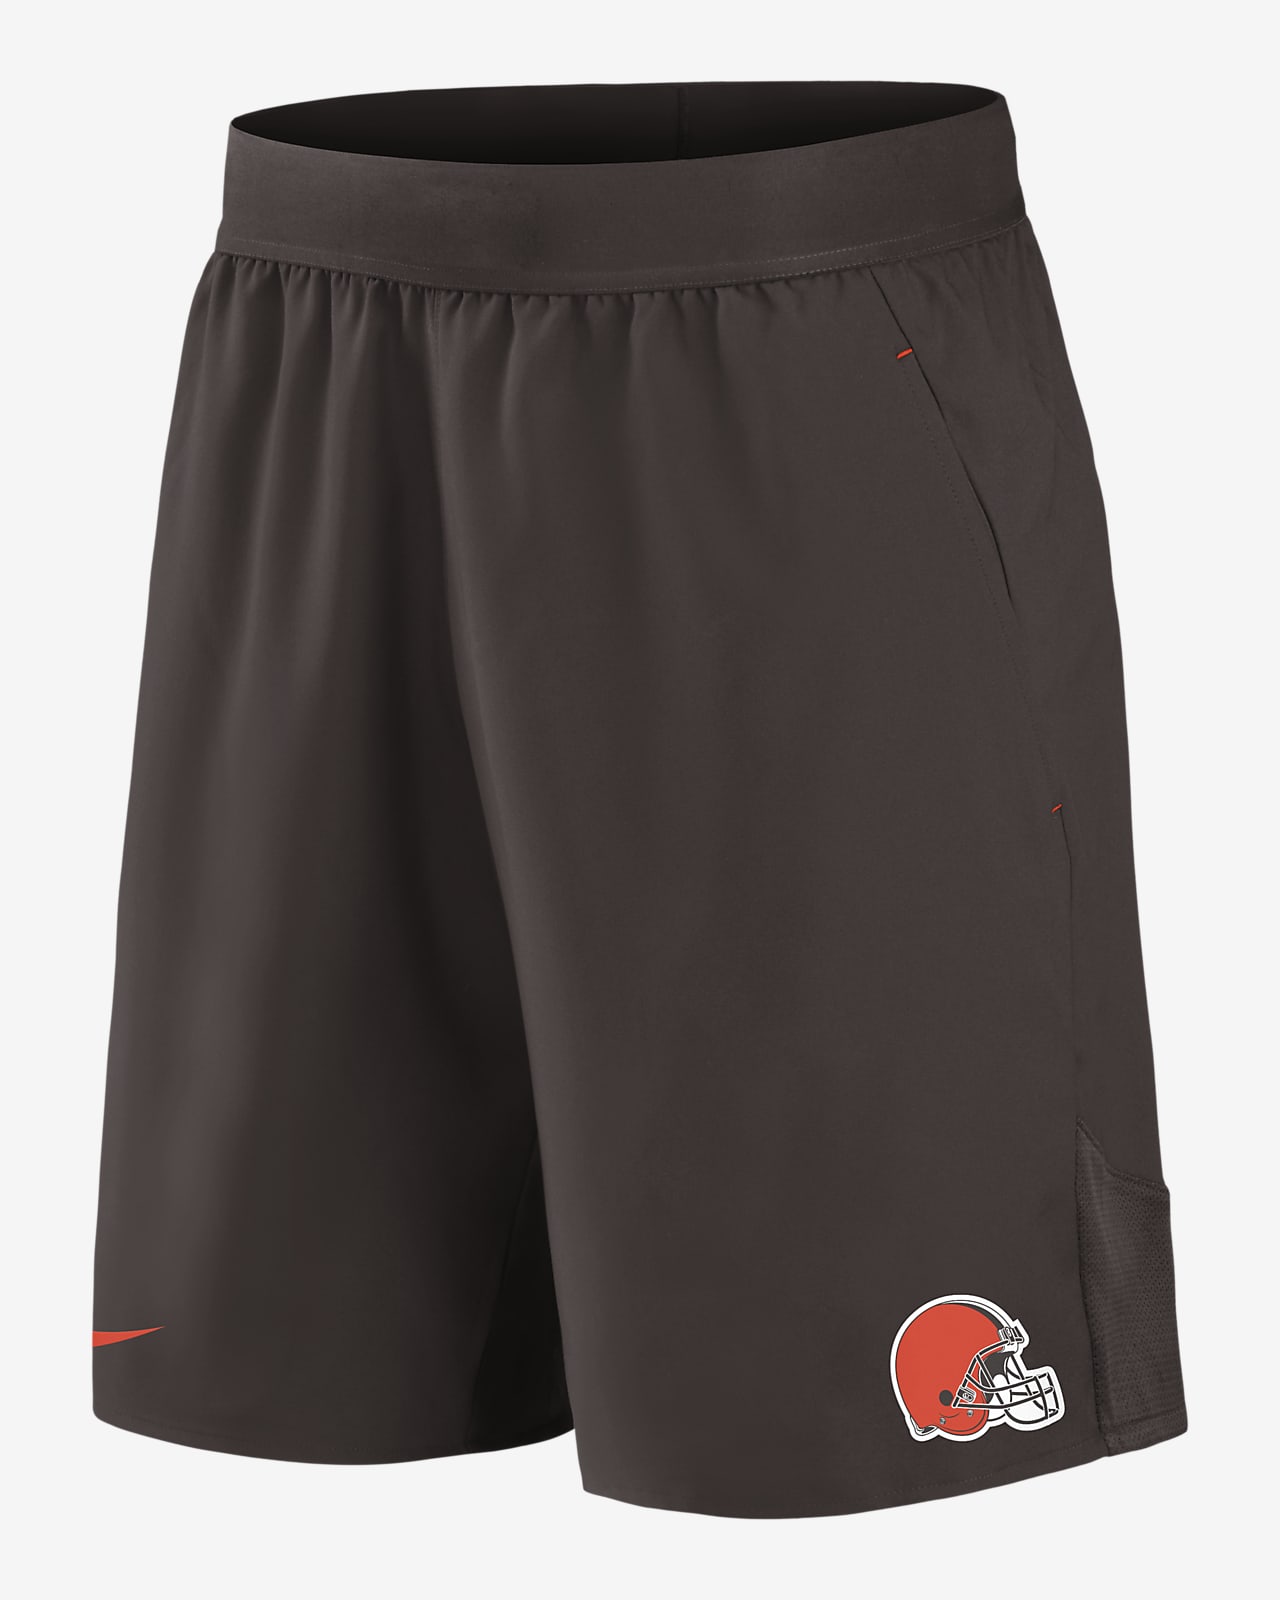 Nike Dri-FIT Stretch (NFL Cleveland Browns) Men's Shorts